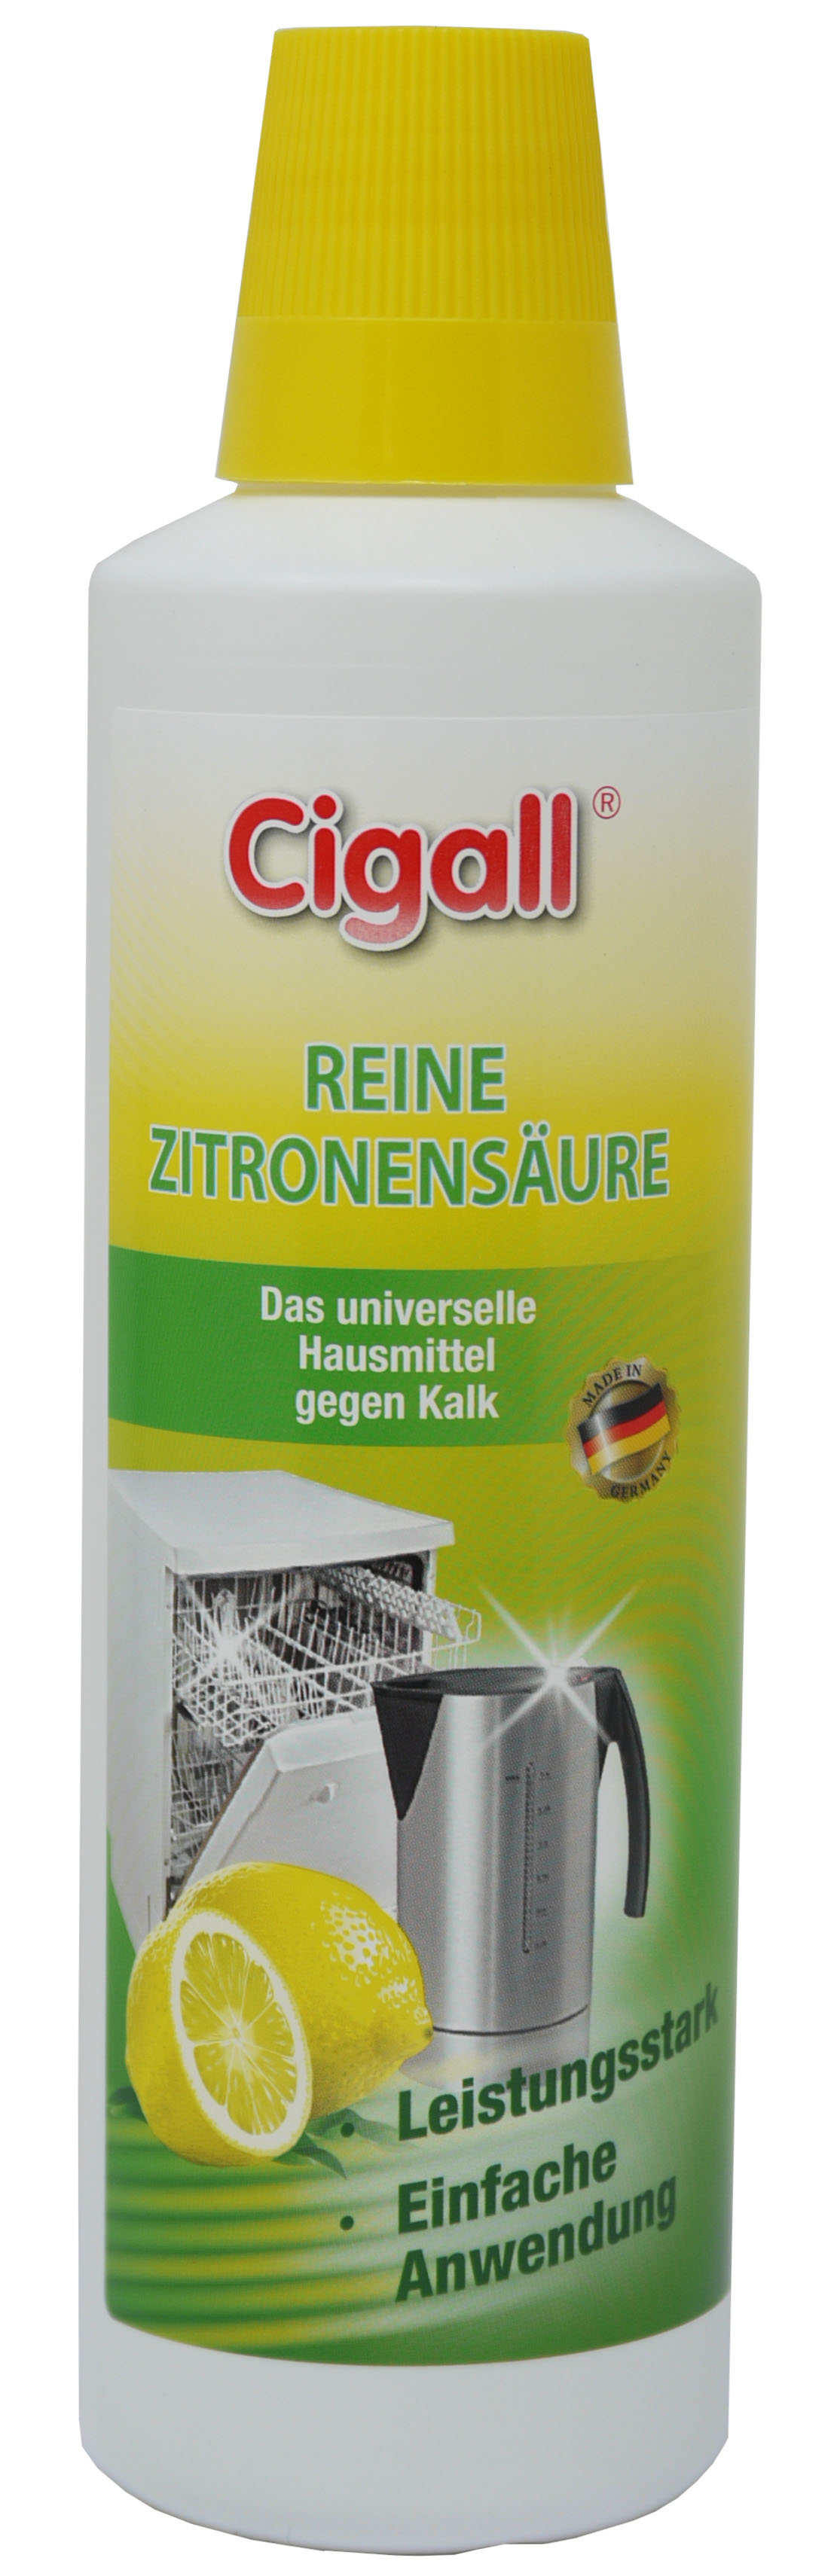 02440 - Cigall Reine Zitronensäure 500ml